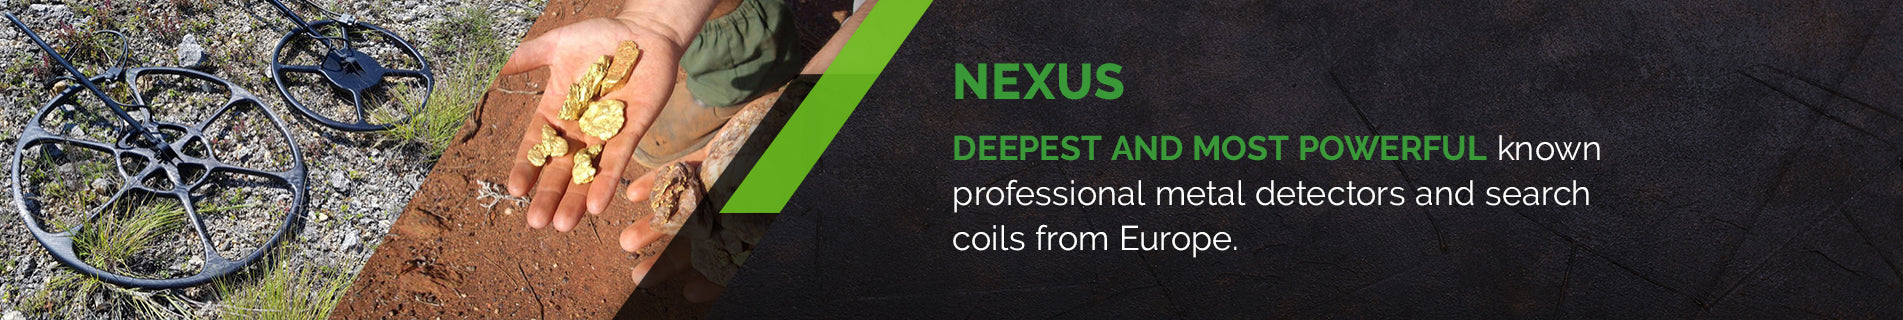 Nexus Metal Detectors | Free US Shipping | Secure Payment